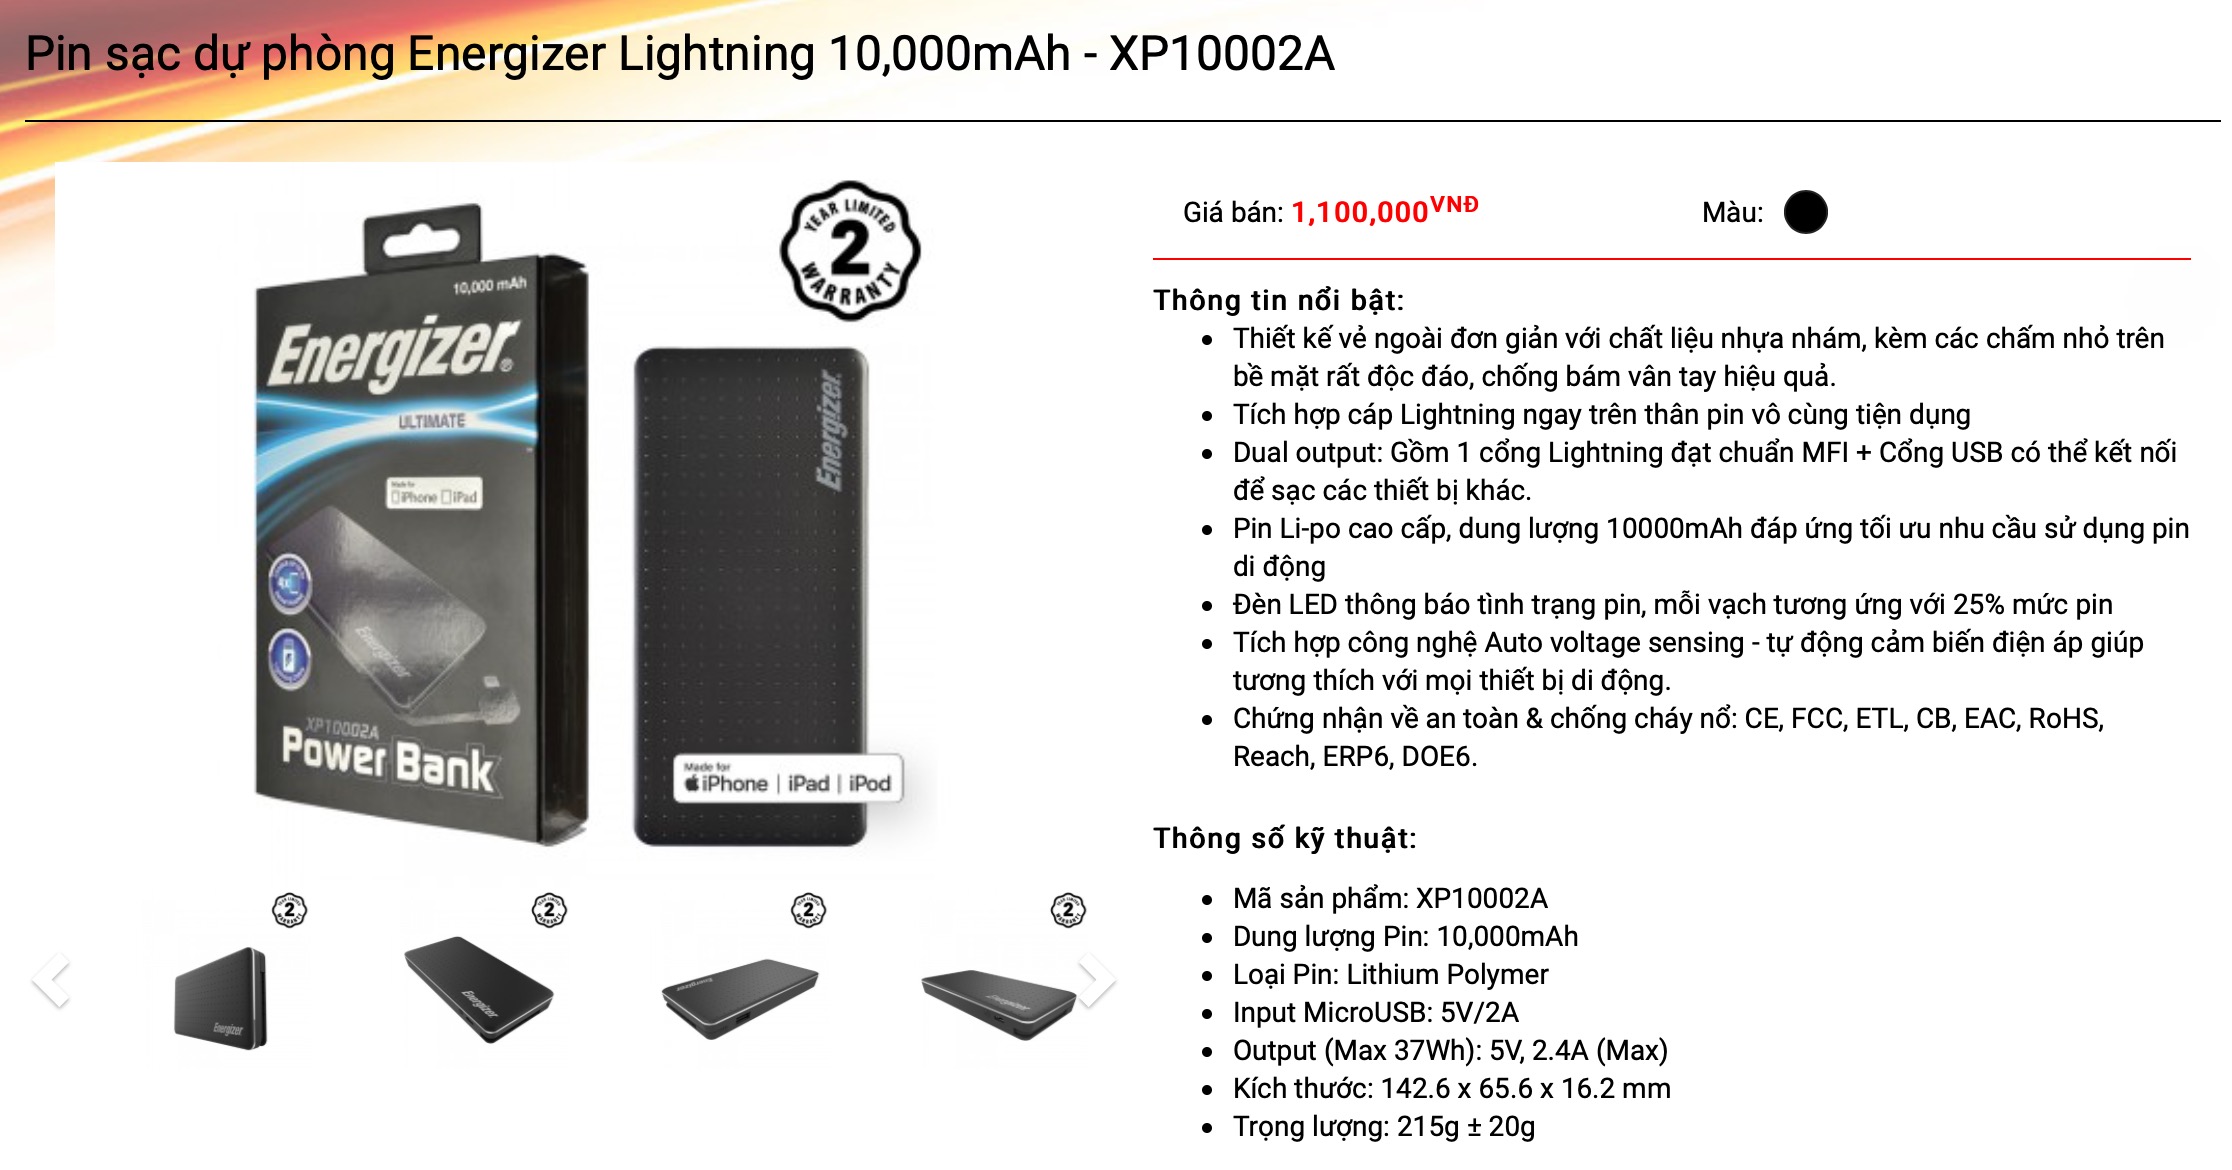 Energizer Lightning 10,000mAh - XP10002A.jpg